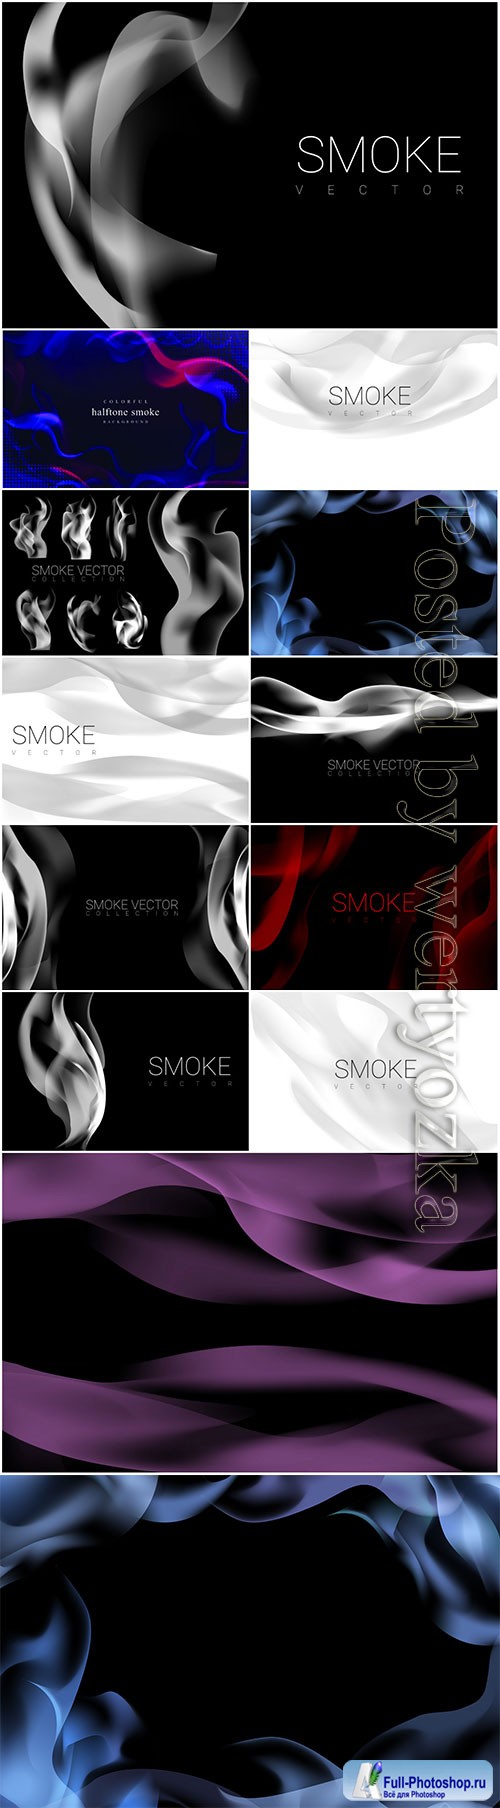 Set of smoke vector background